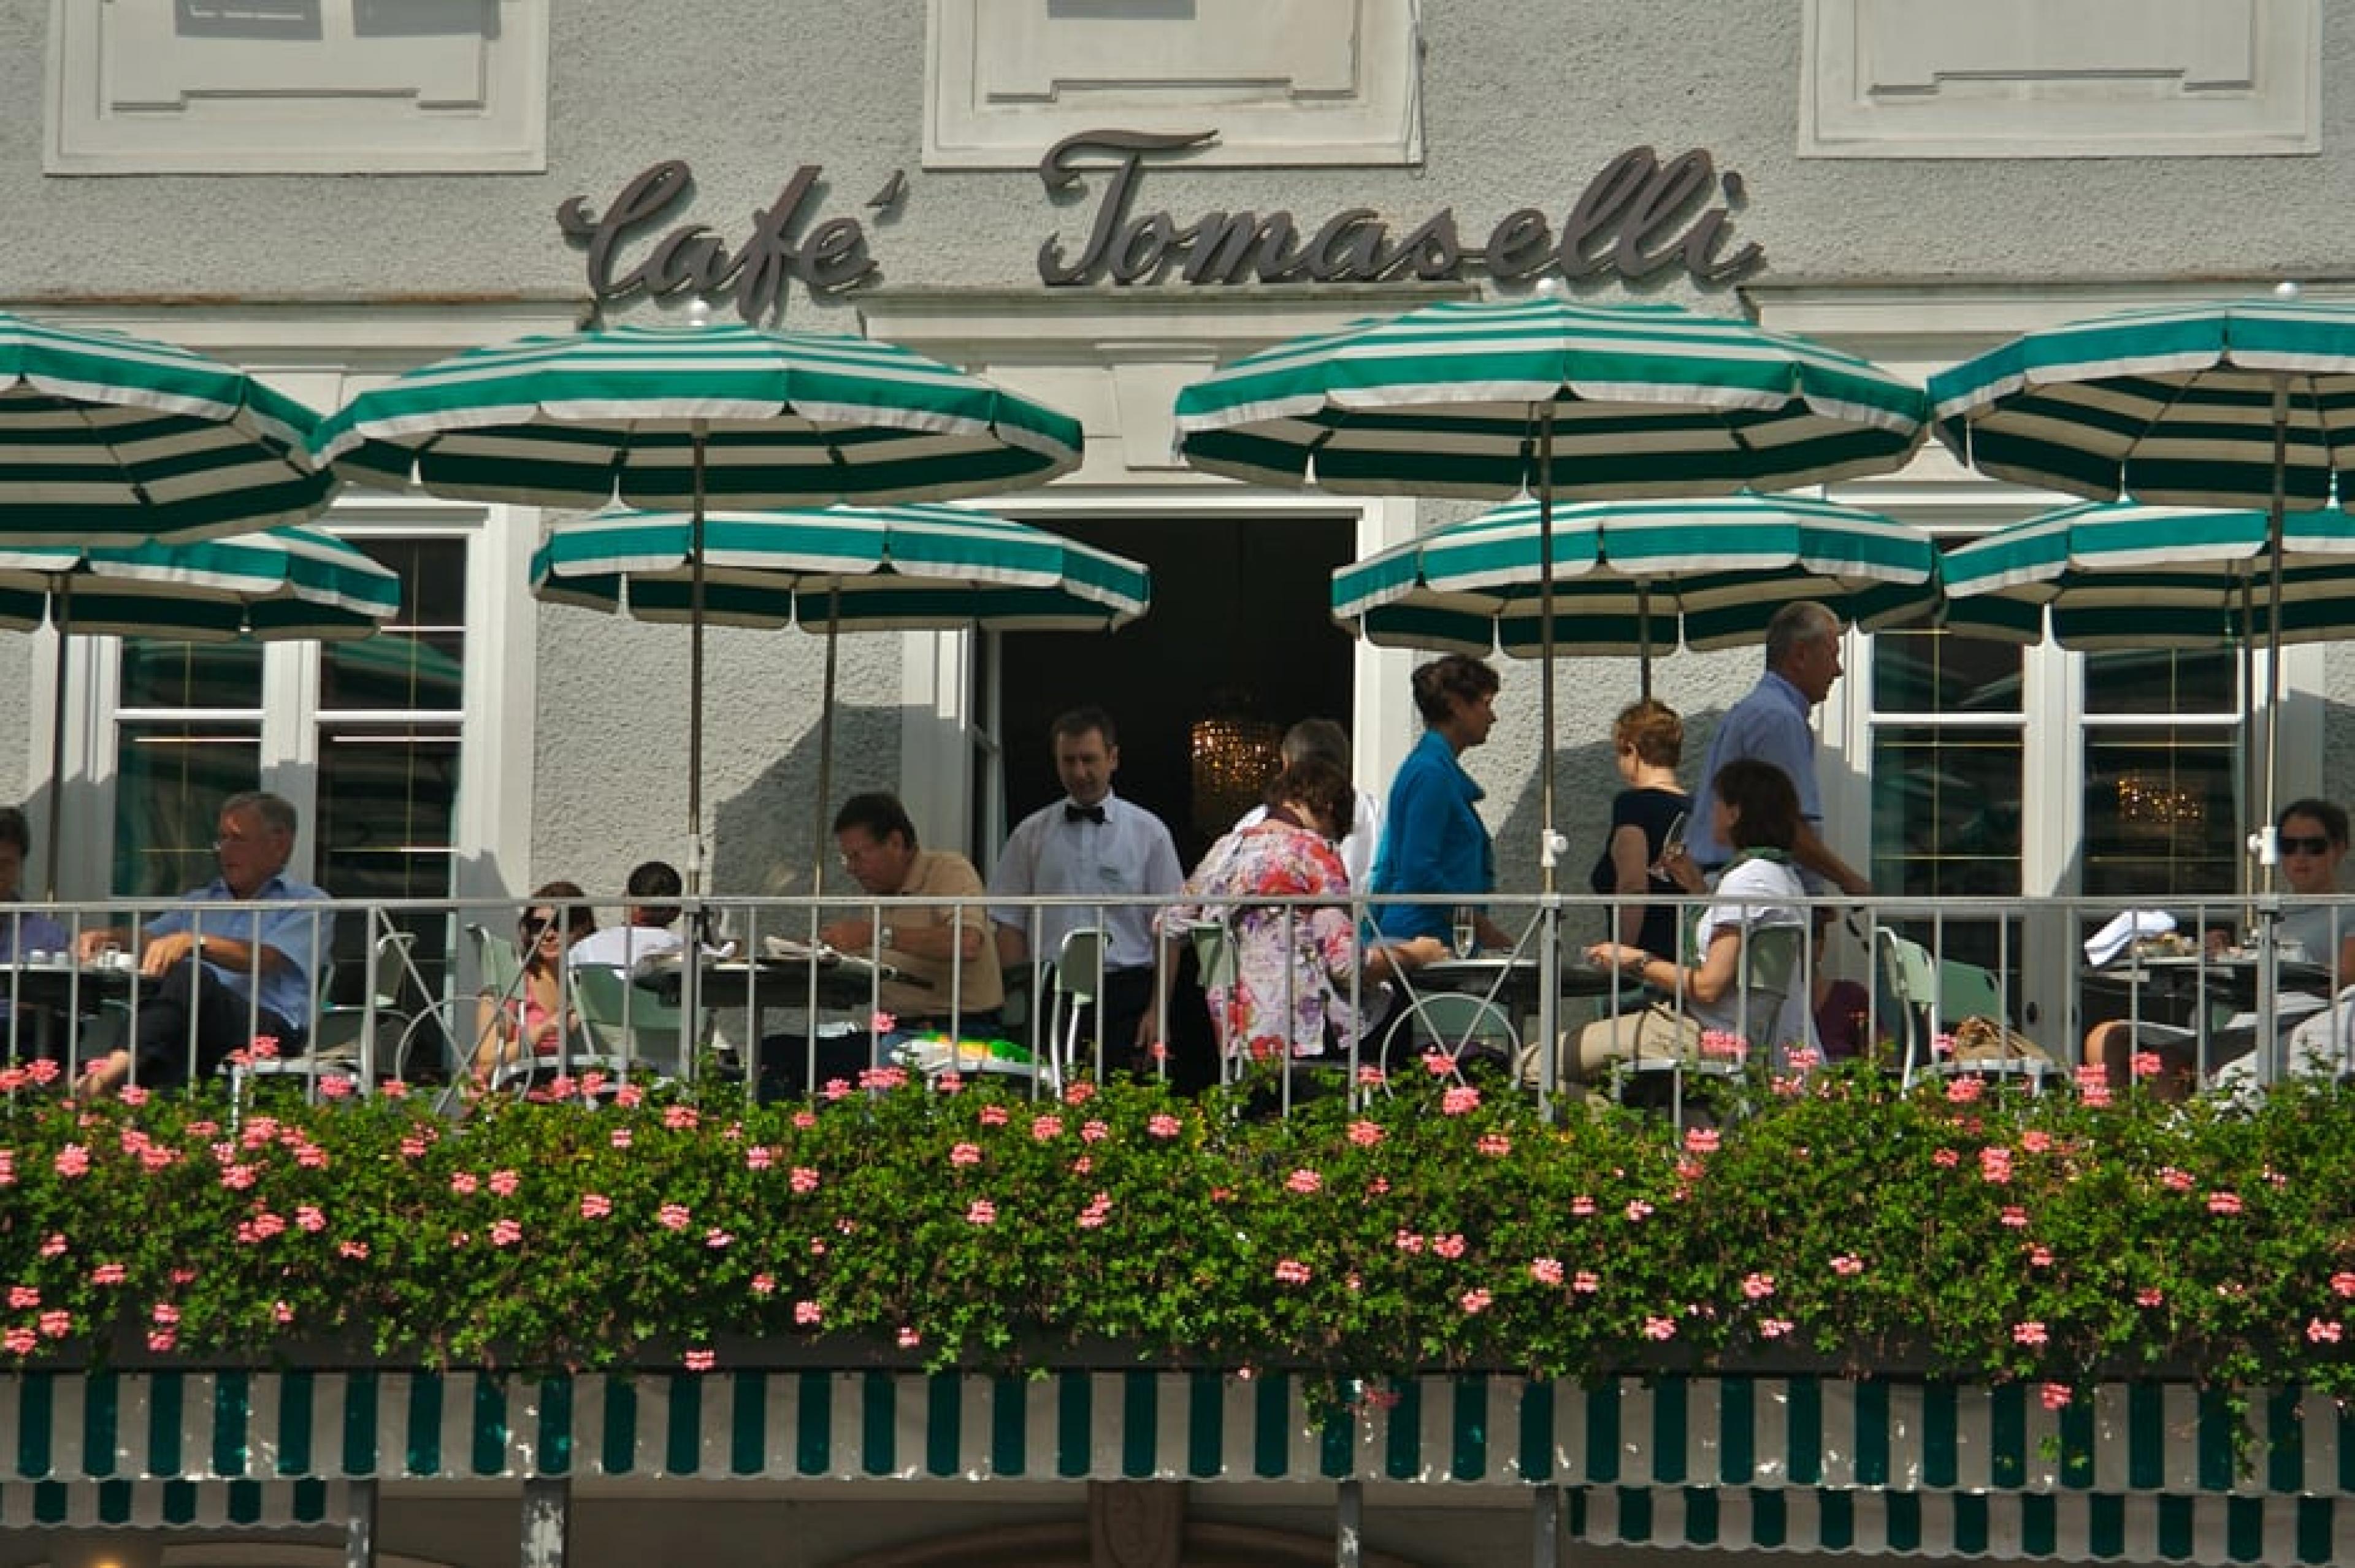 Exterior View - Café Tomaselli, Salzburg, Austria